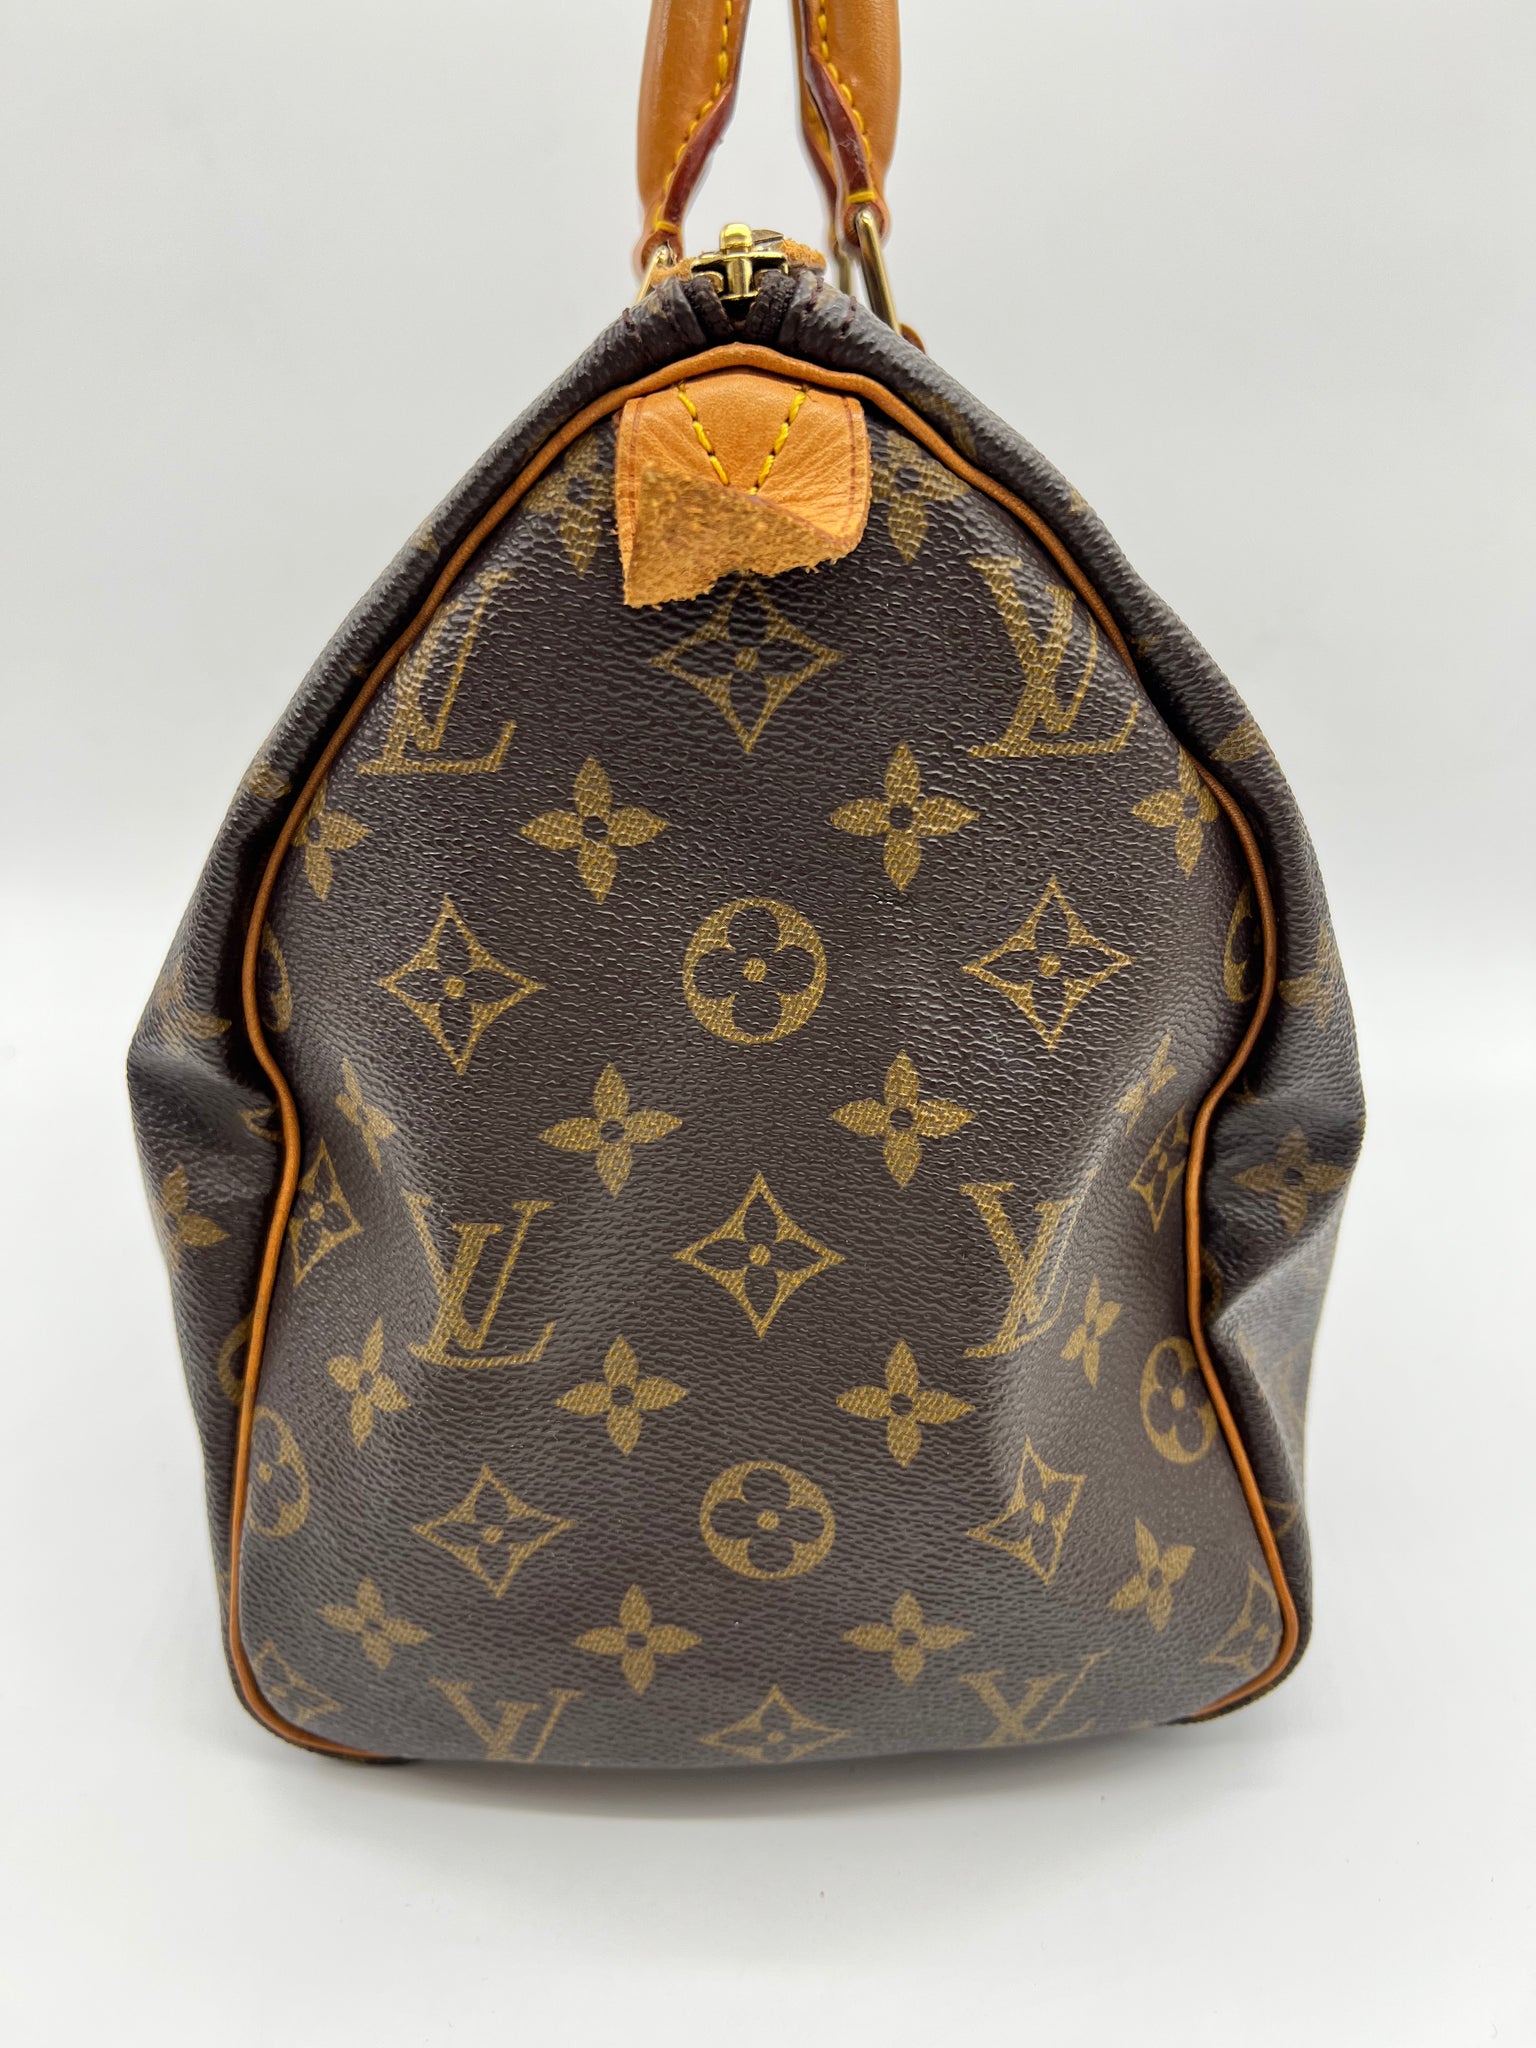 Vintage Louis Vuitton Monogram Speedy 30 Handbag SP0917 032423